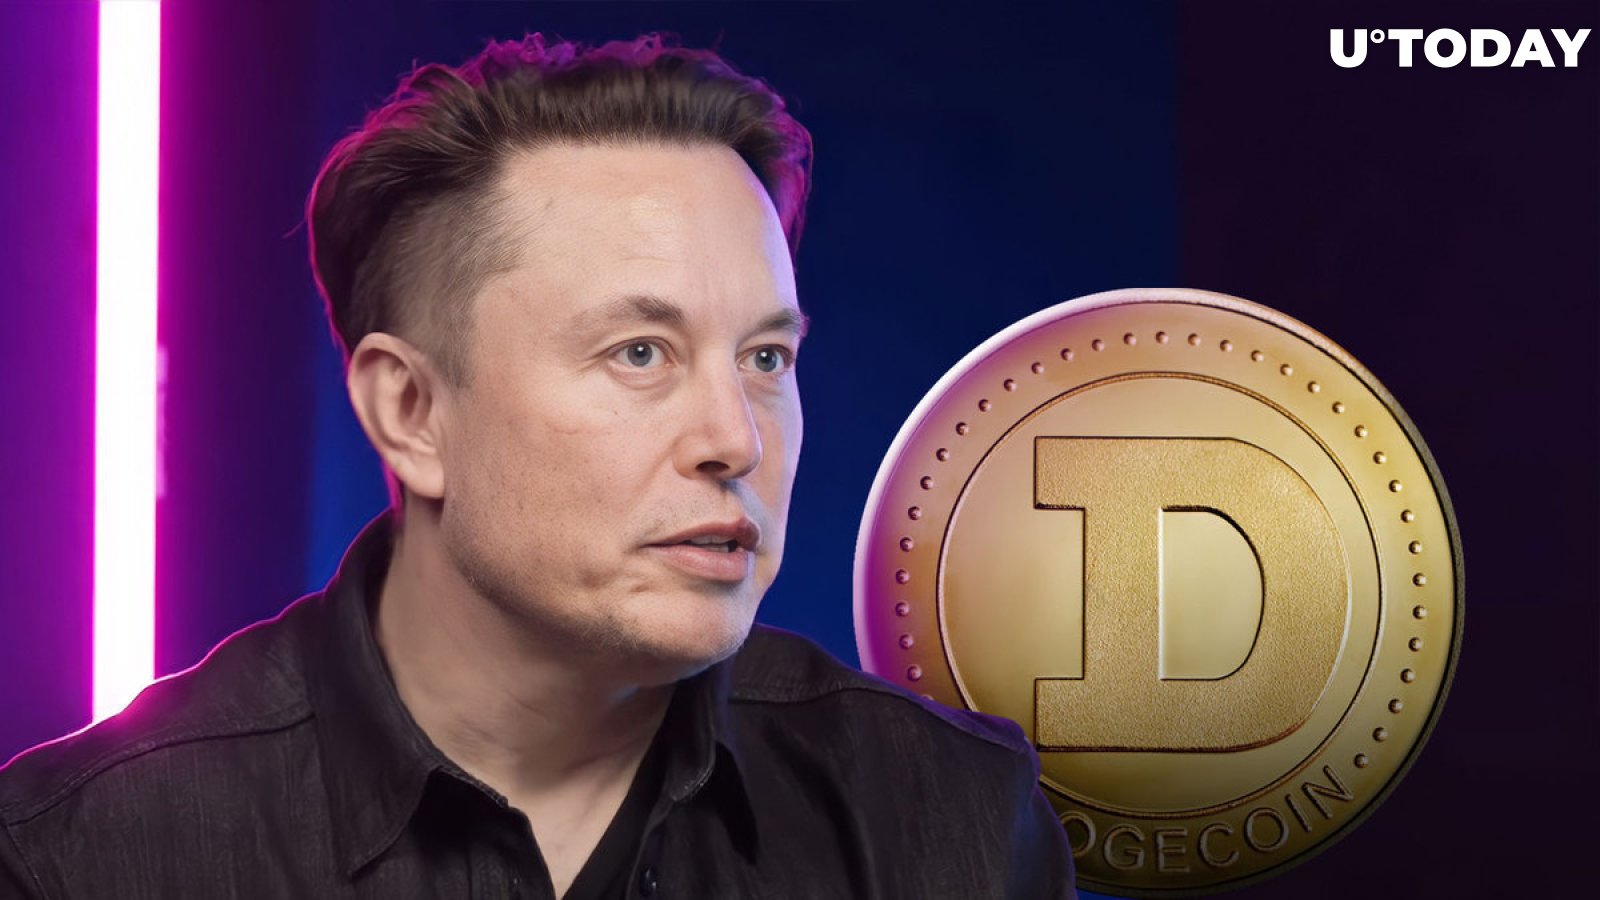 Dogecoin Founder Supports Elon Musk's Recent Meme Post